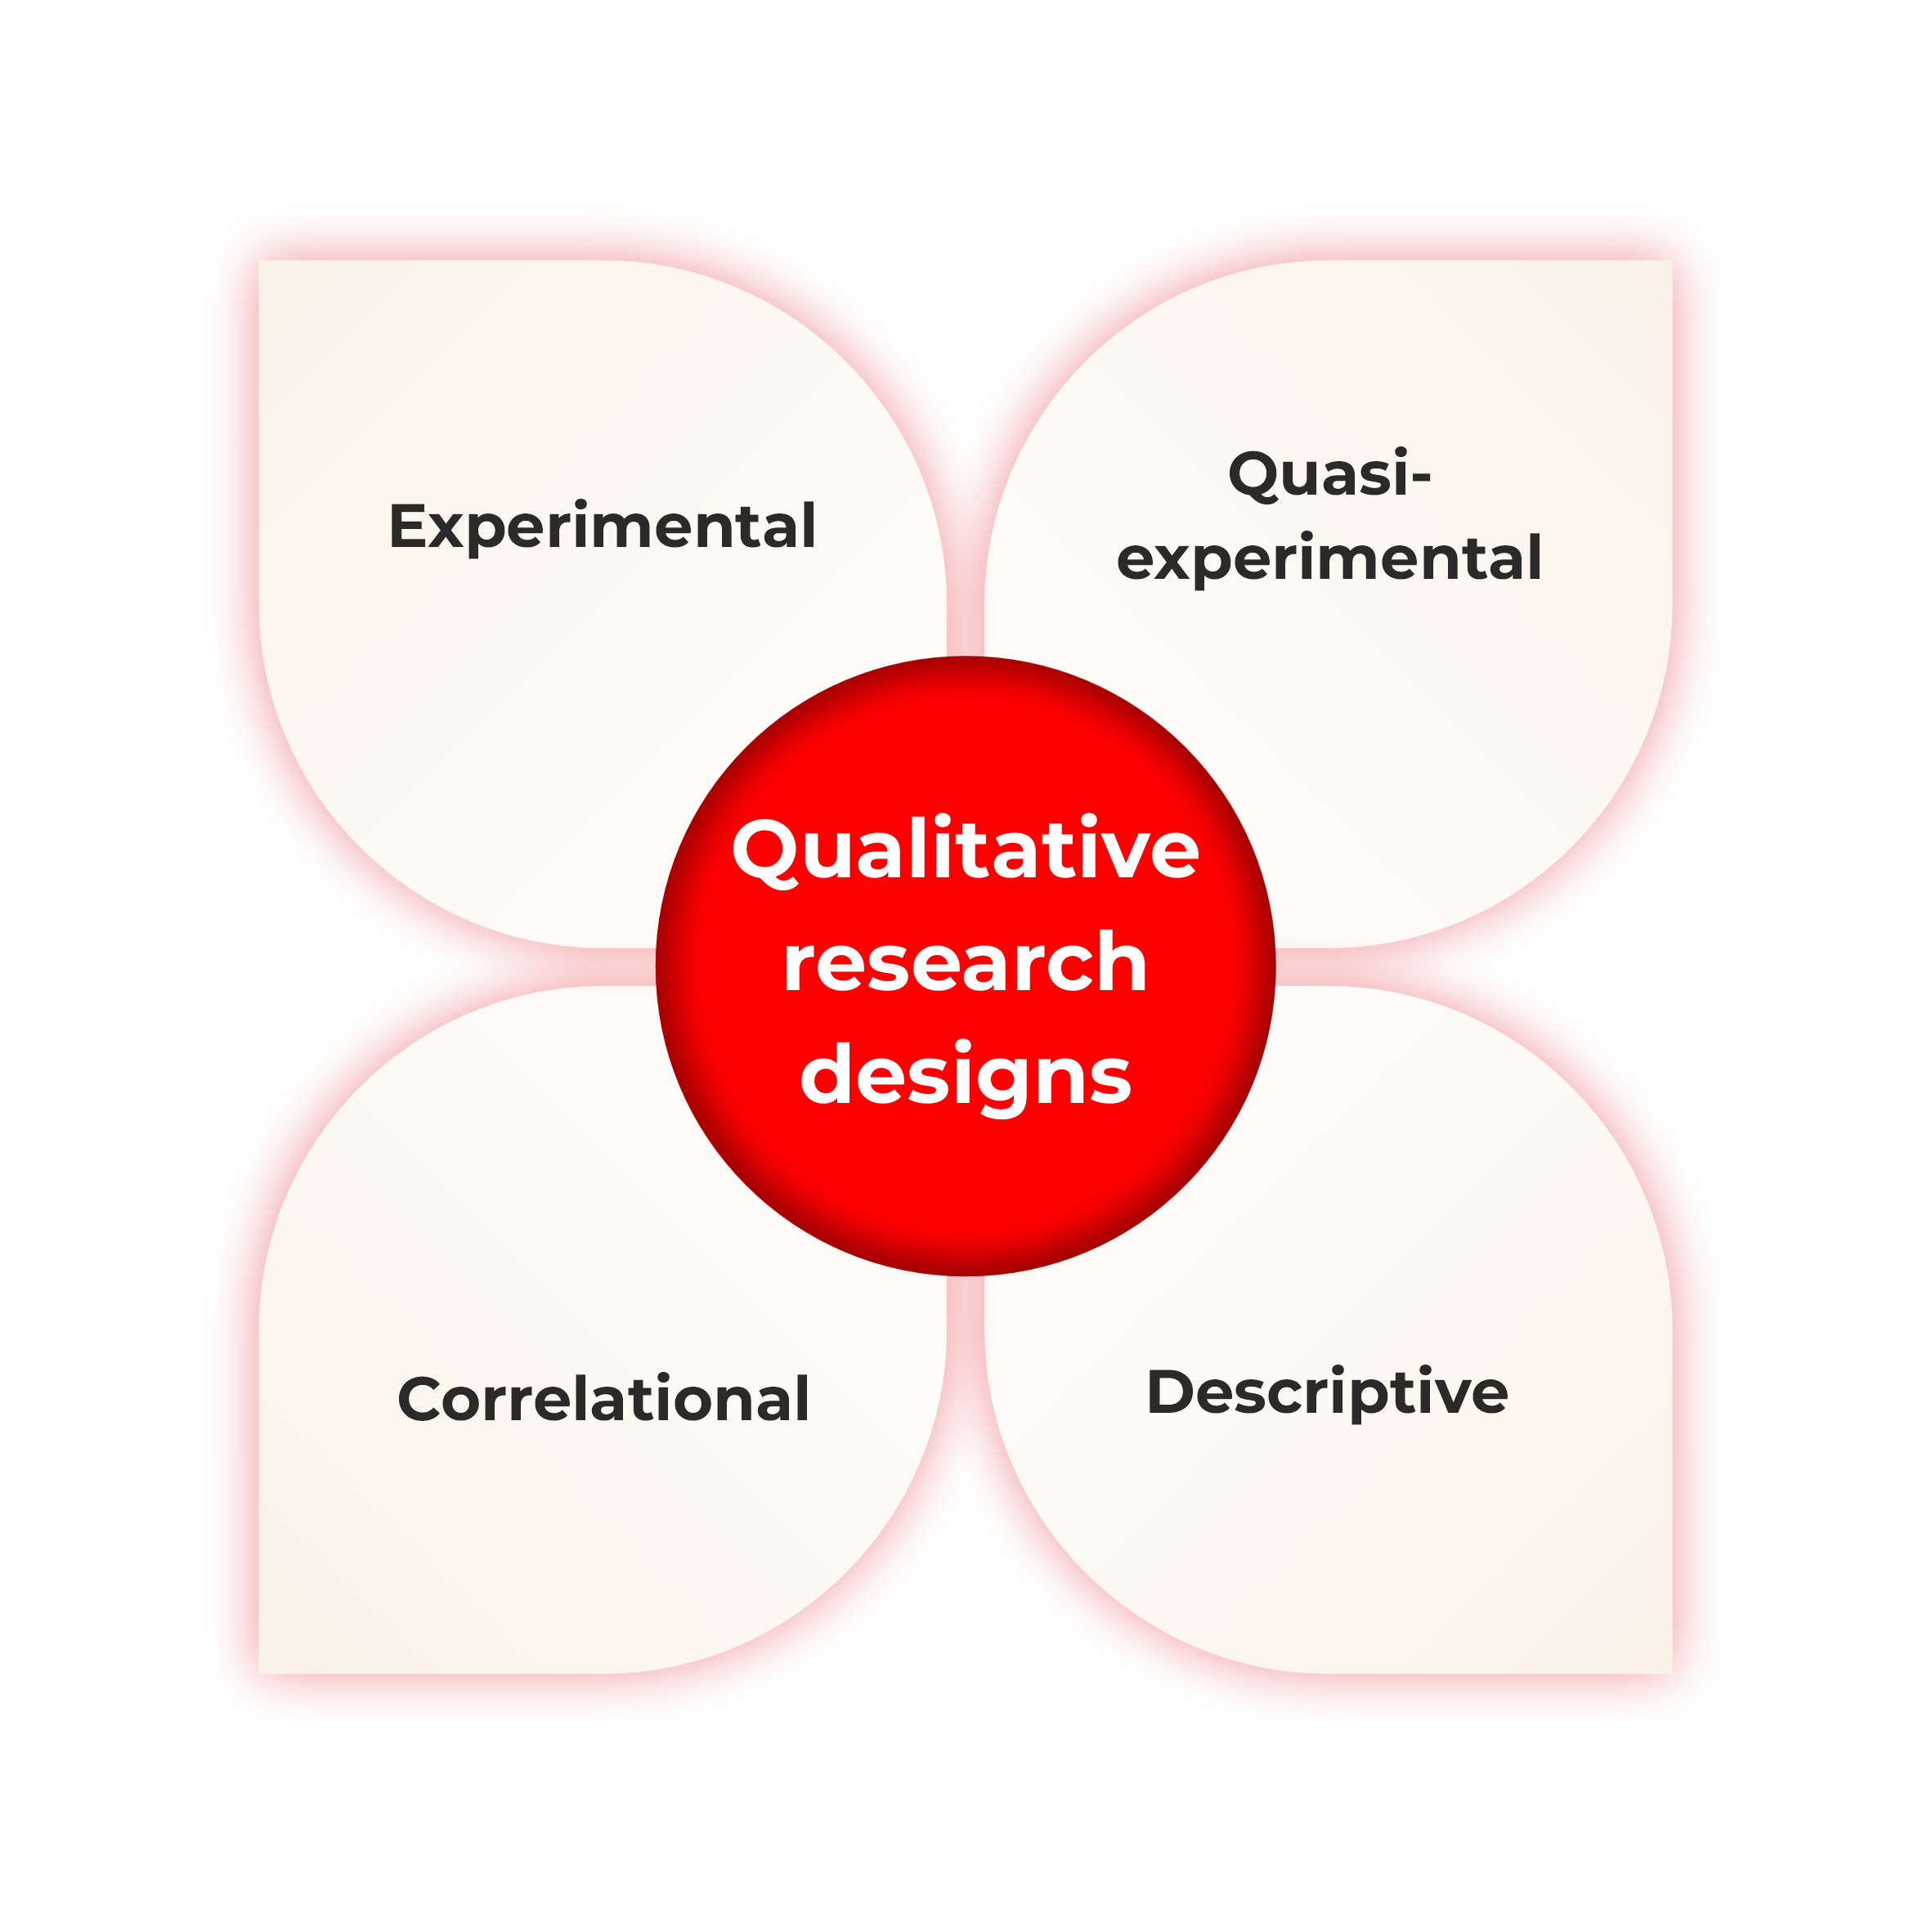 qualitative research designs